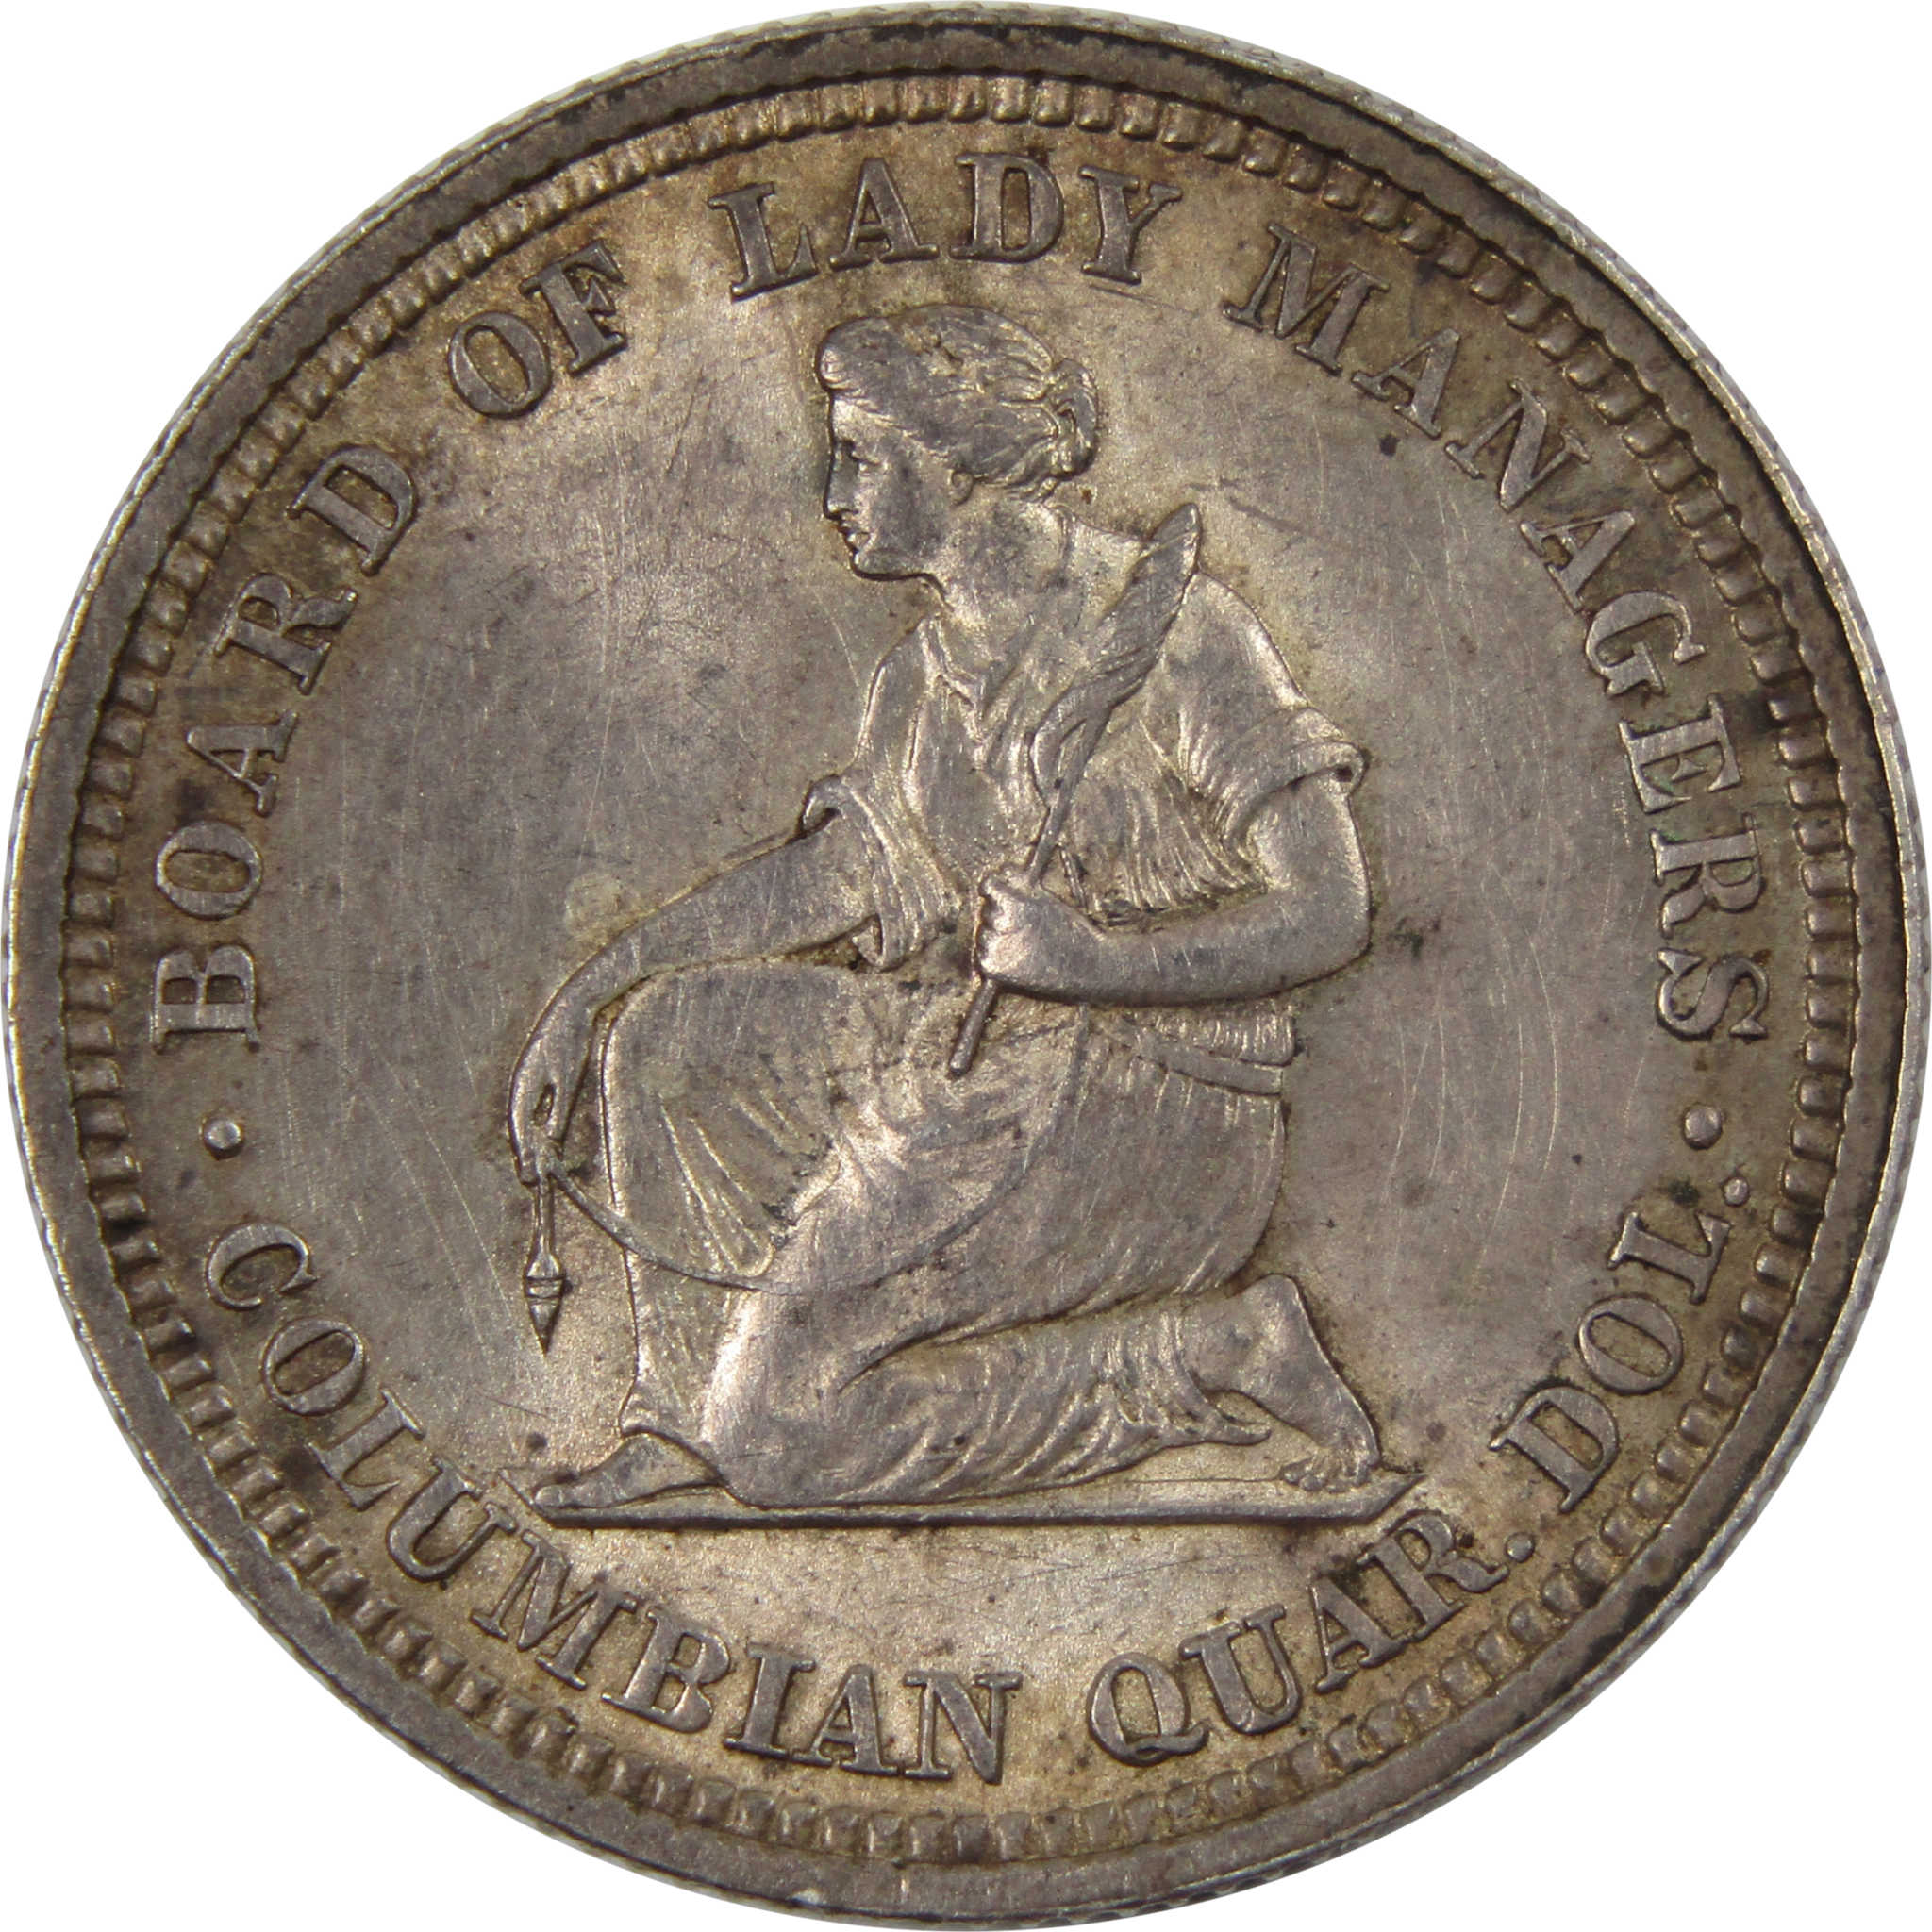 World's Columbian Isabella Commemorative Quarter 1893 AU SKU:I7390